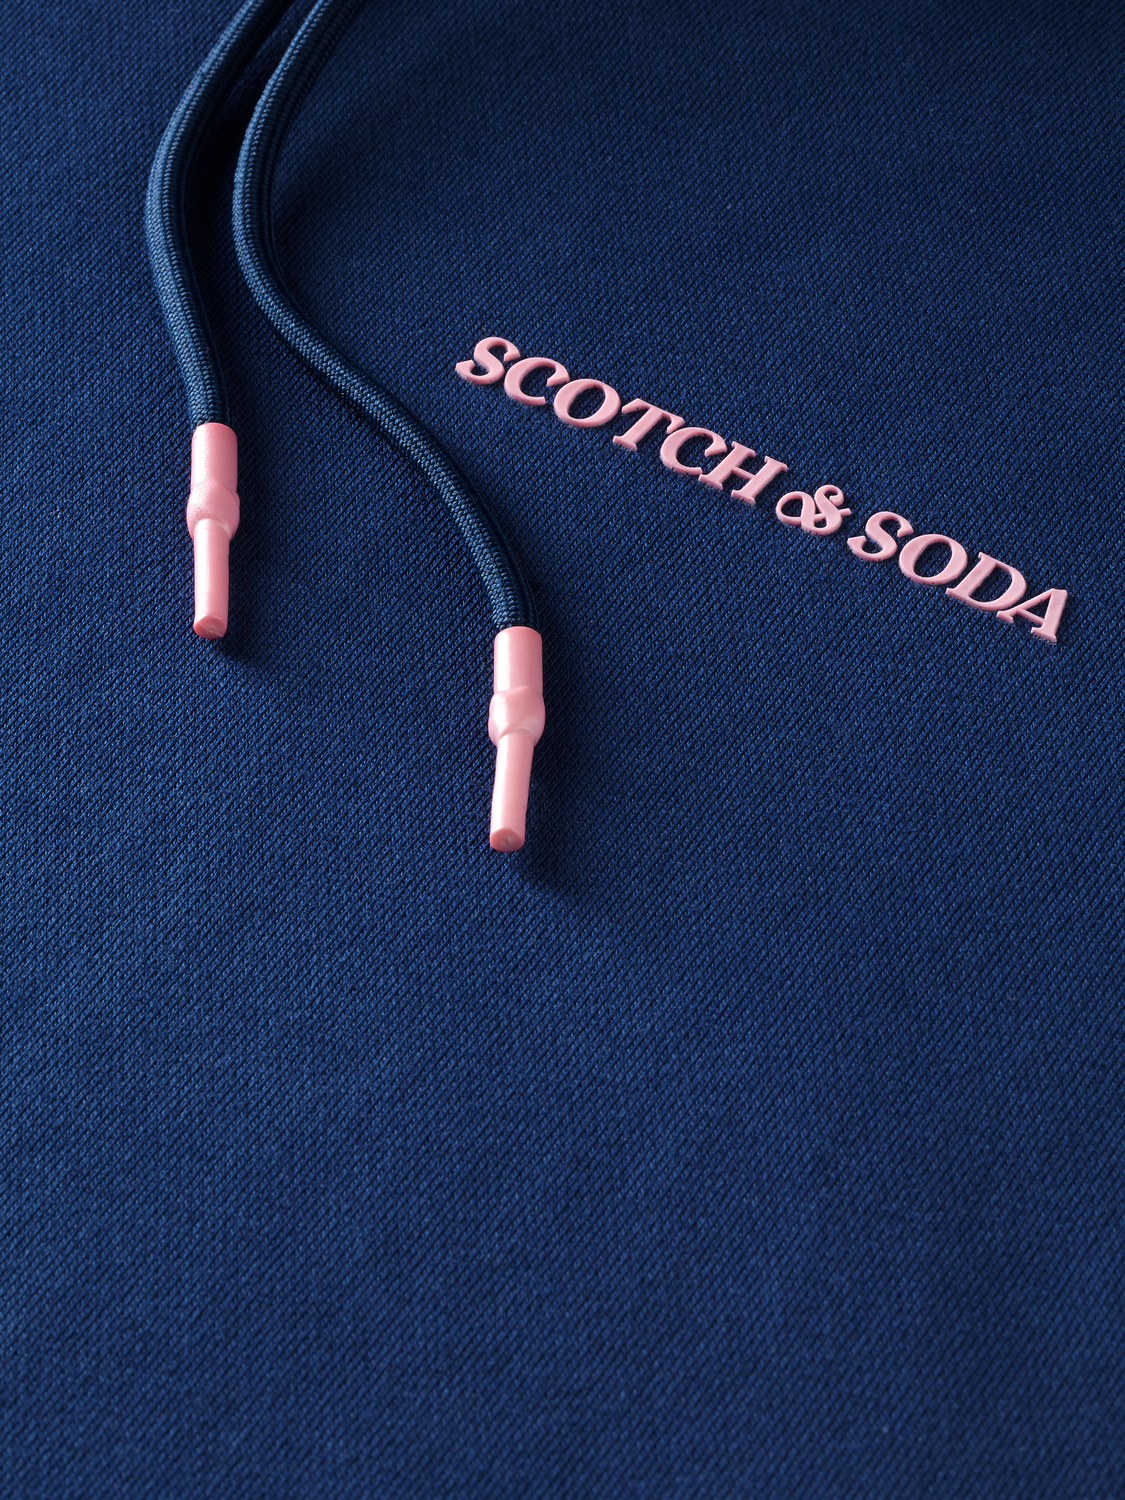 Scotch and Soda summer organic cotton hoodie